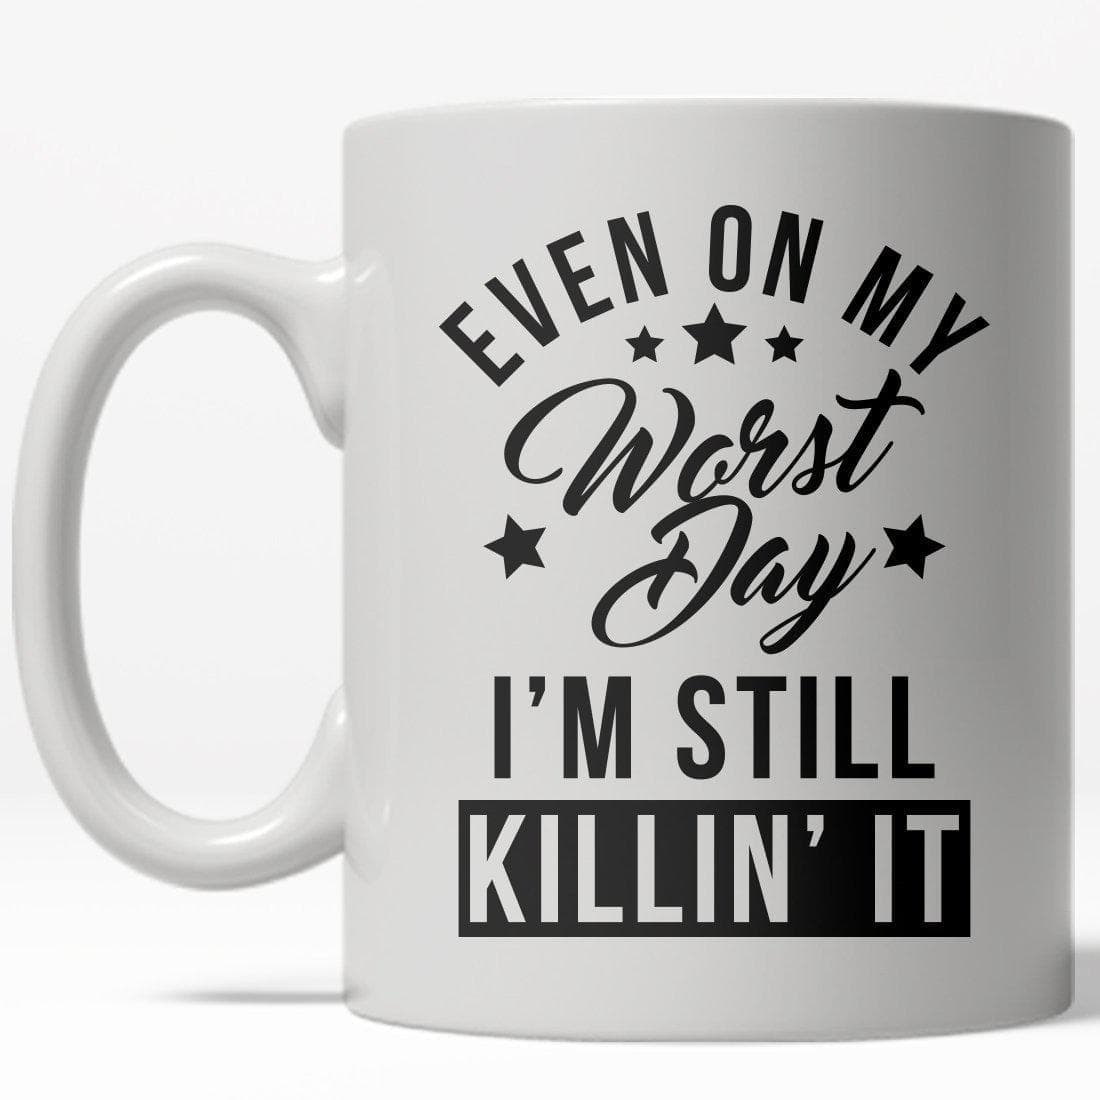 Even On My Worst Day I'm Still Killin' It Mug - Crazy Dog T-Shirts